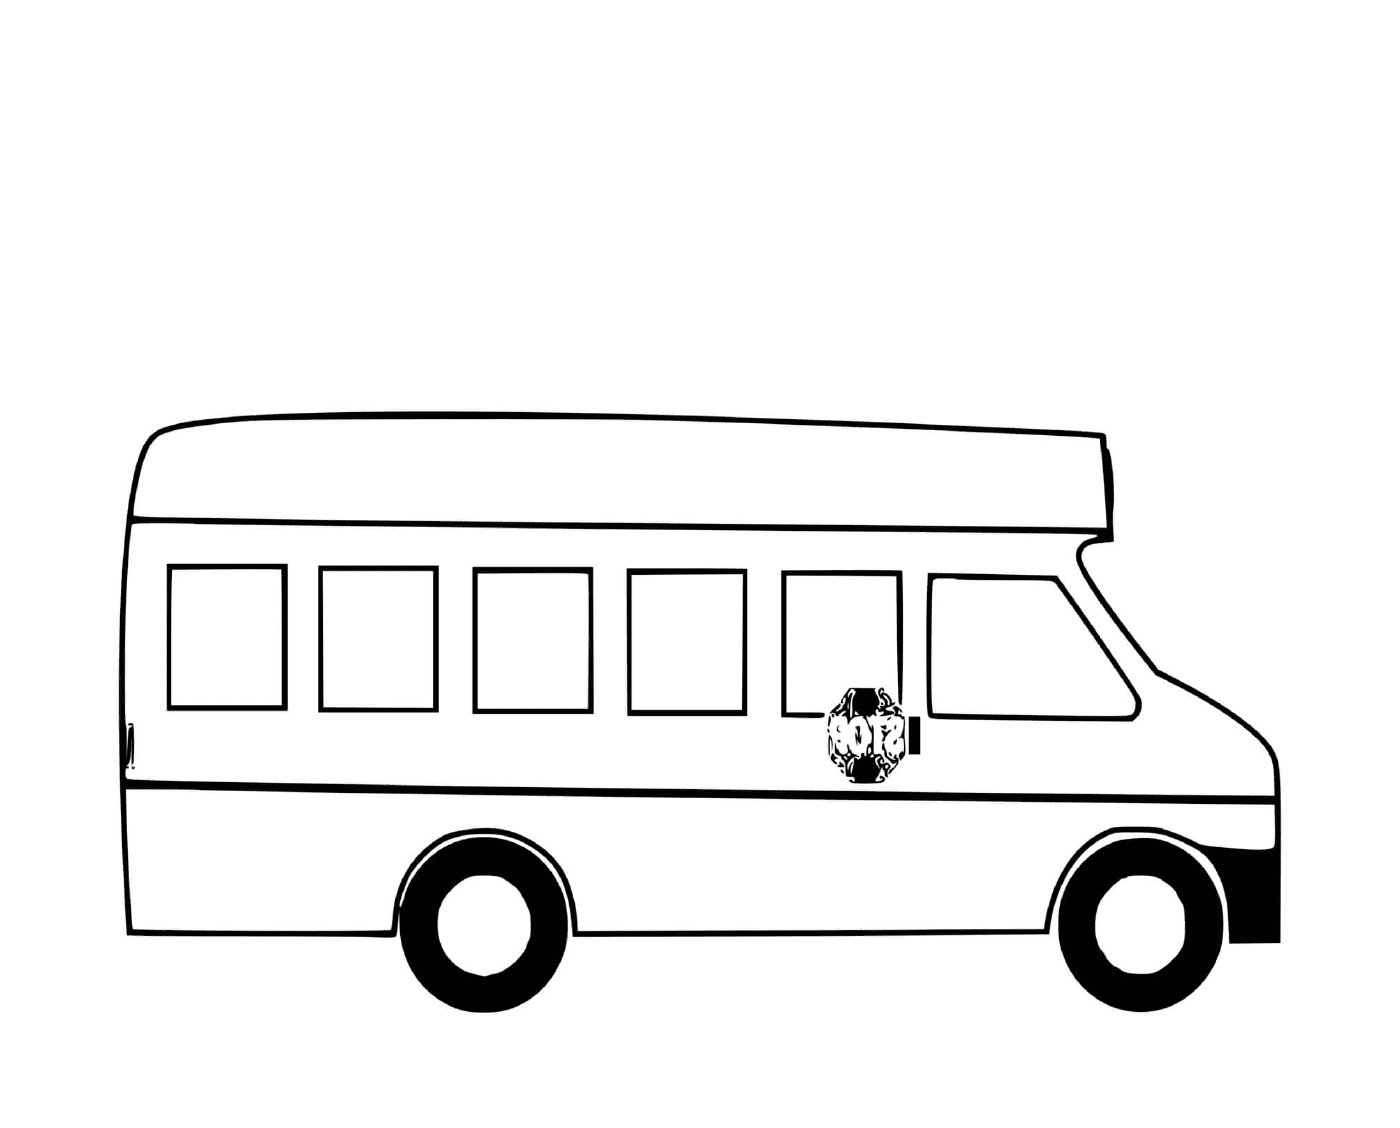  A bus for school children 